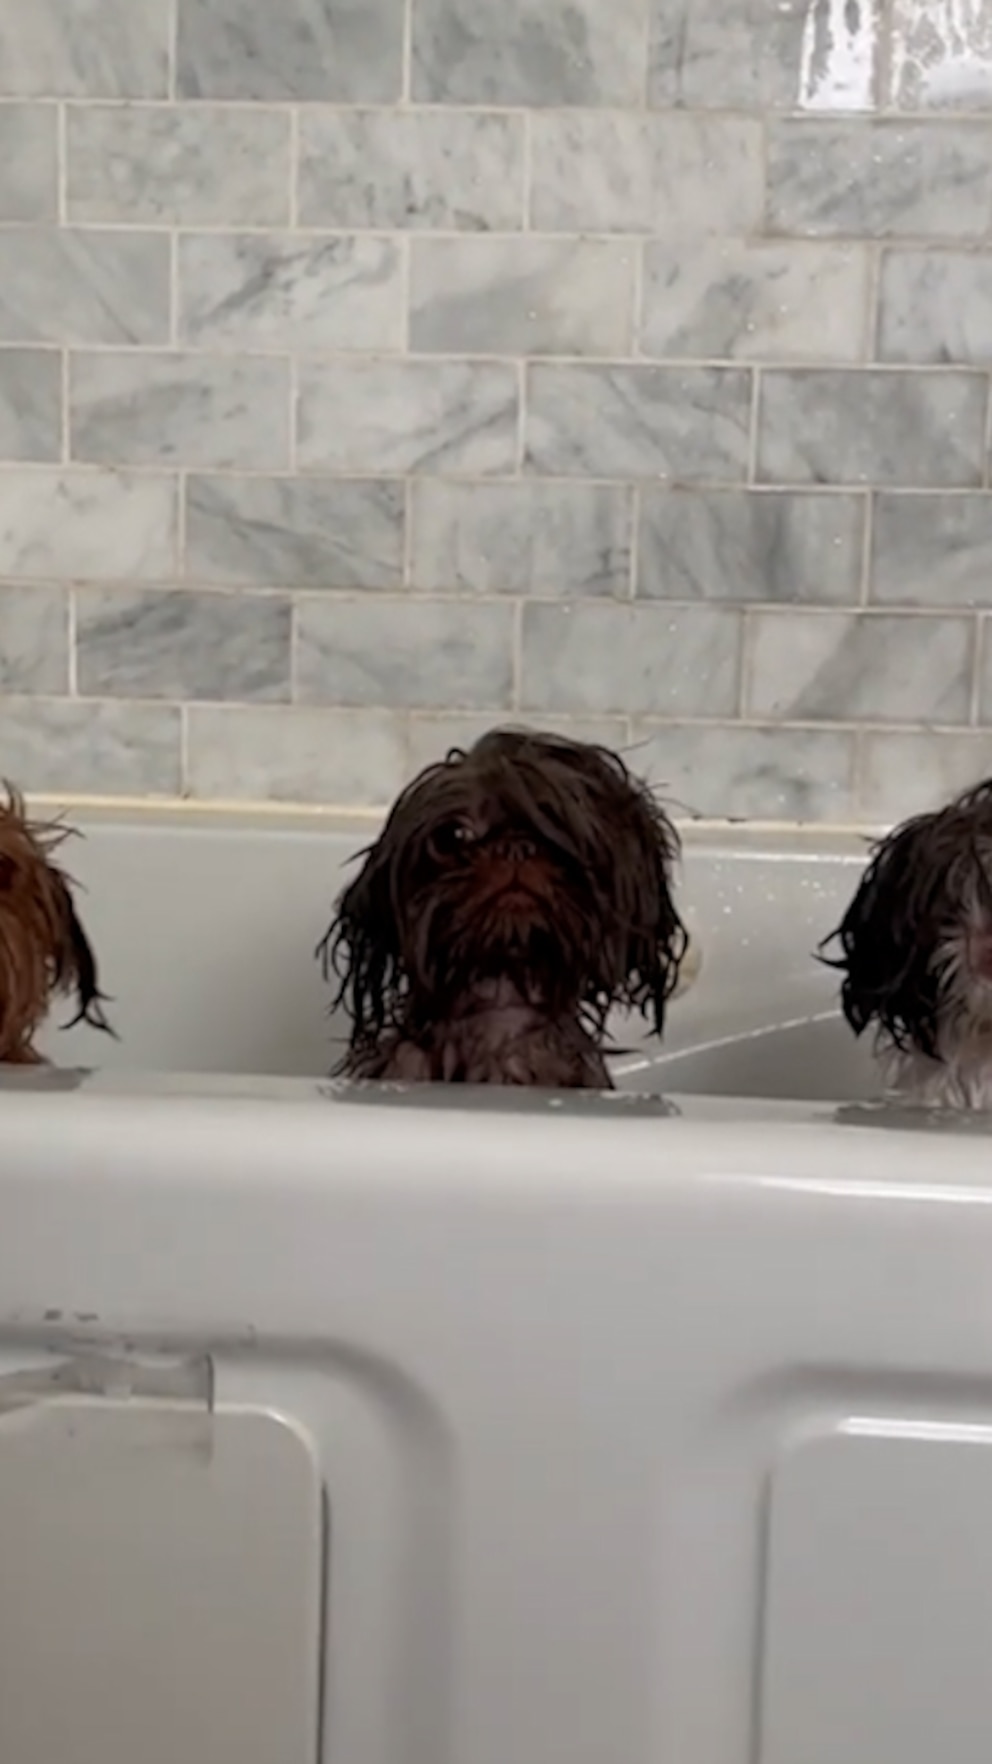 WATCH: 3 shih tzus pop their heads up above a tub mid-bath